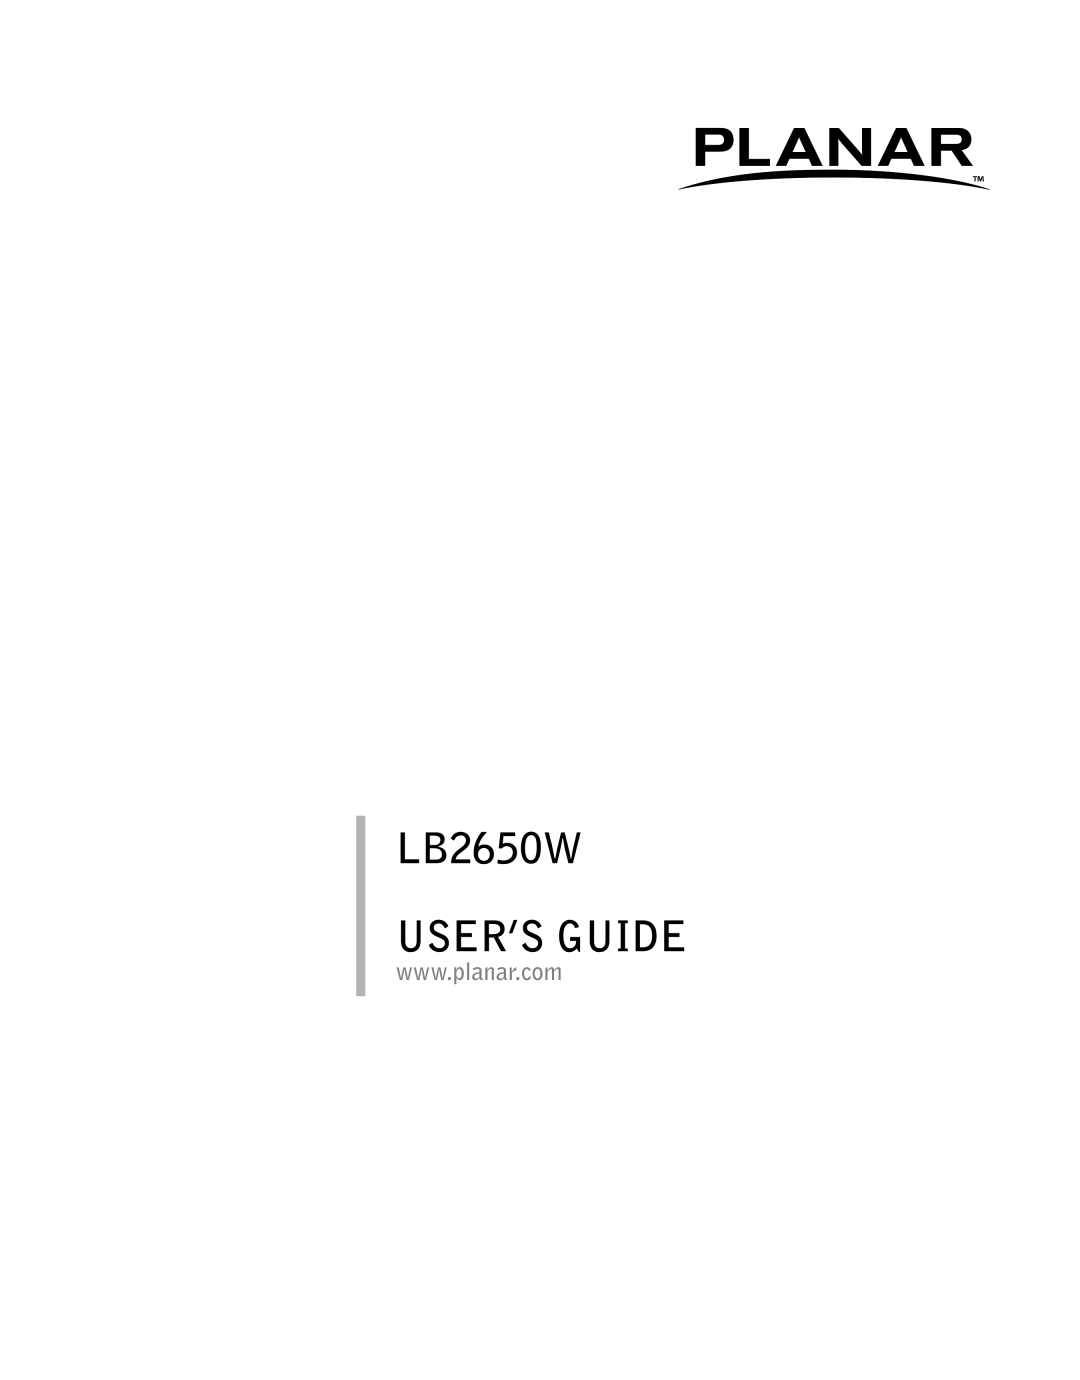 Planar manual LB2650W USER’S GUIDE 